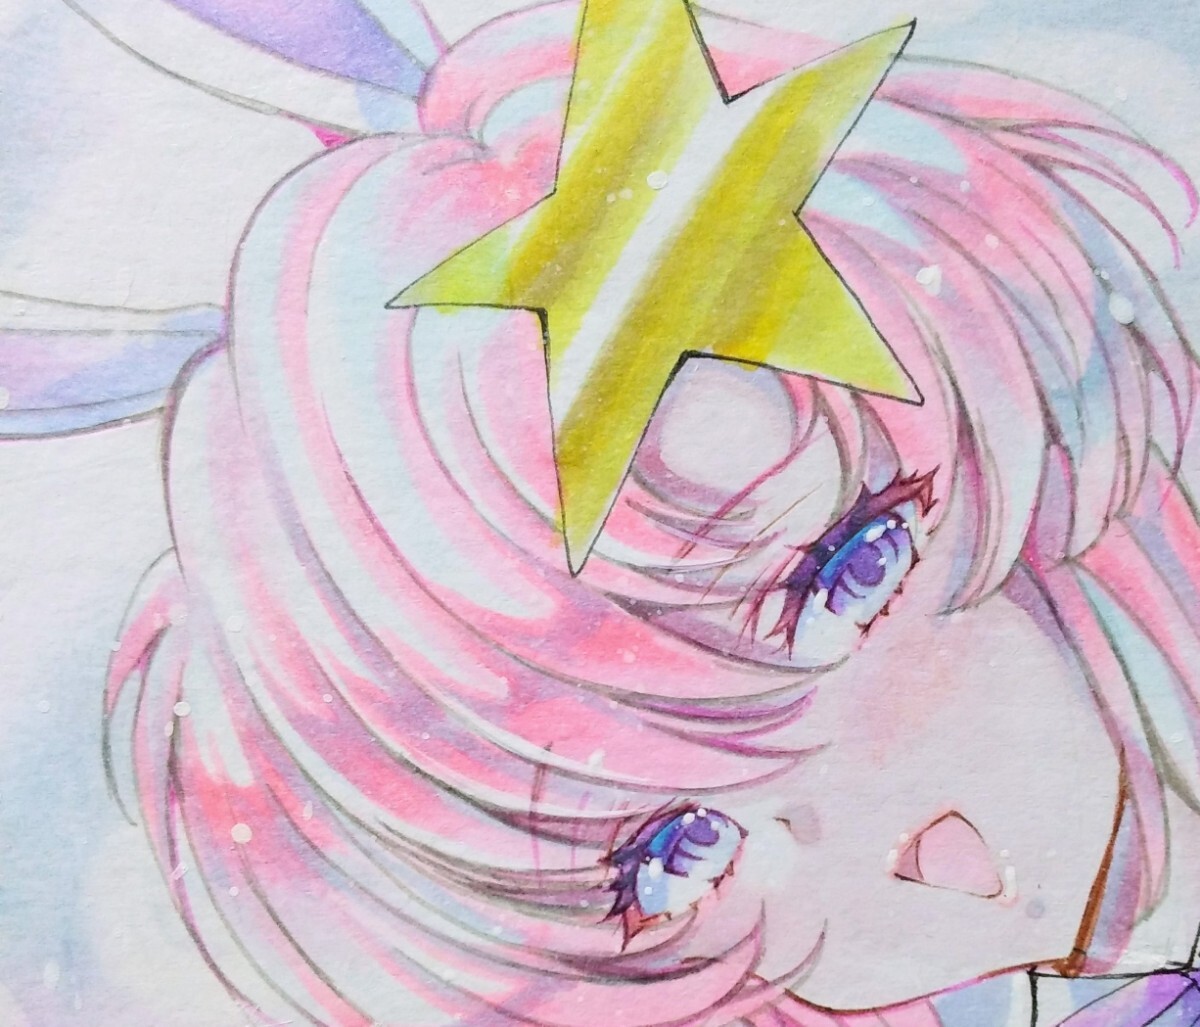 Colored paper [Meer Campbell Bunny Gundam] Bunny Girl Doujin Original Hand-drawn Illustration Girl Illustration, comics, anime goods, hand drawn illustration